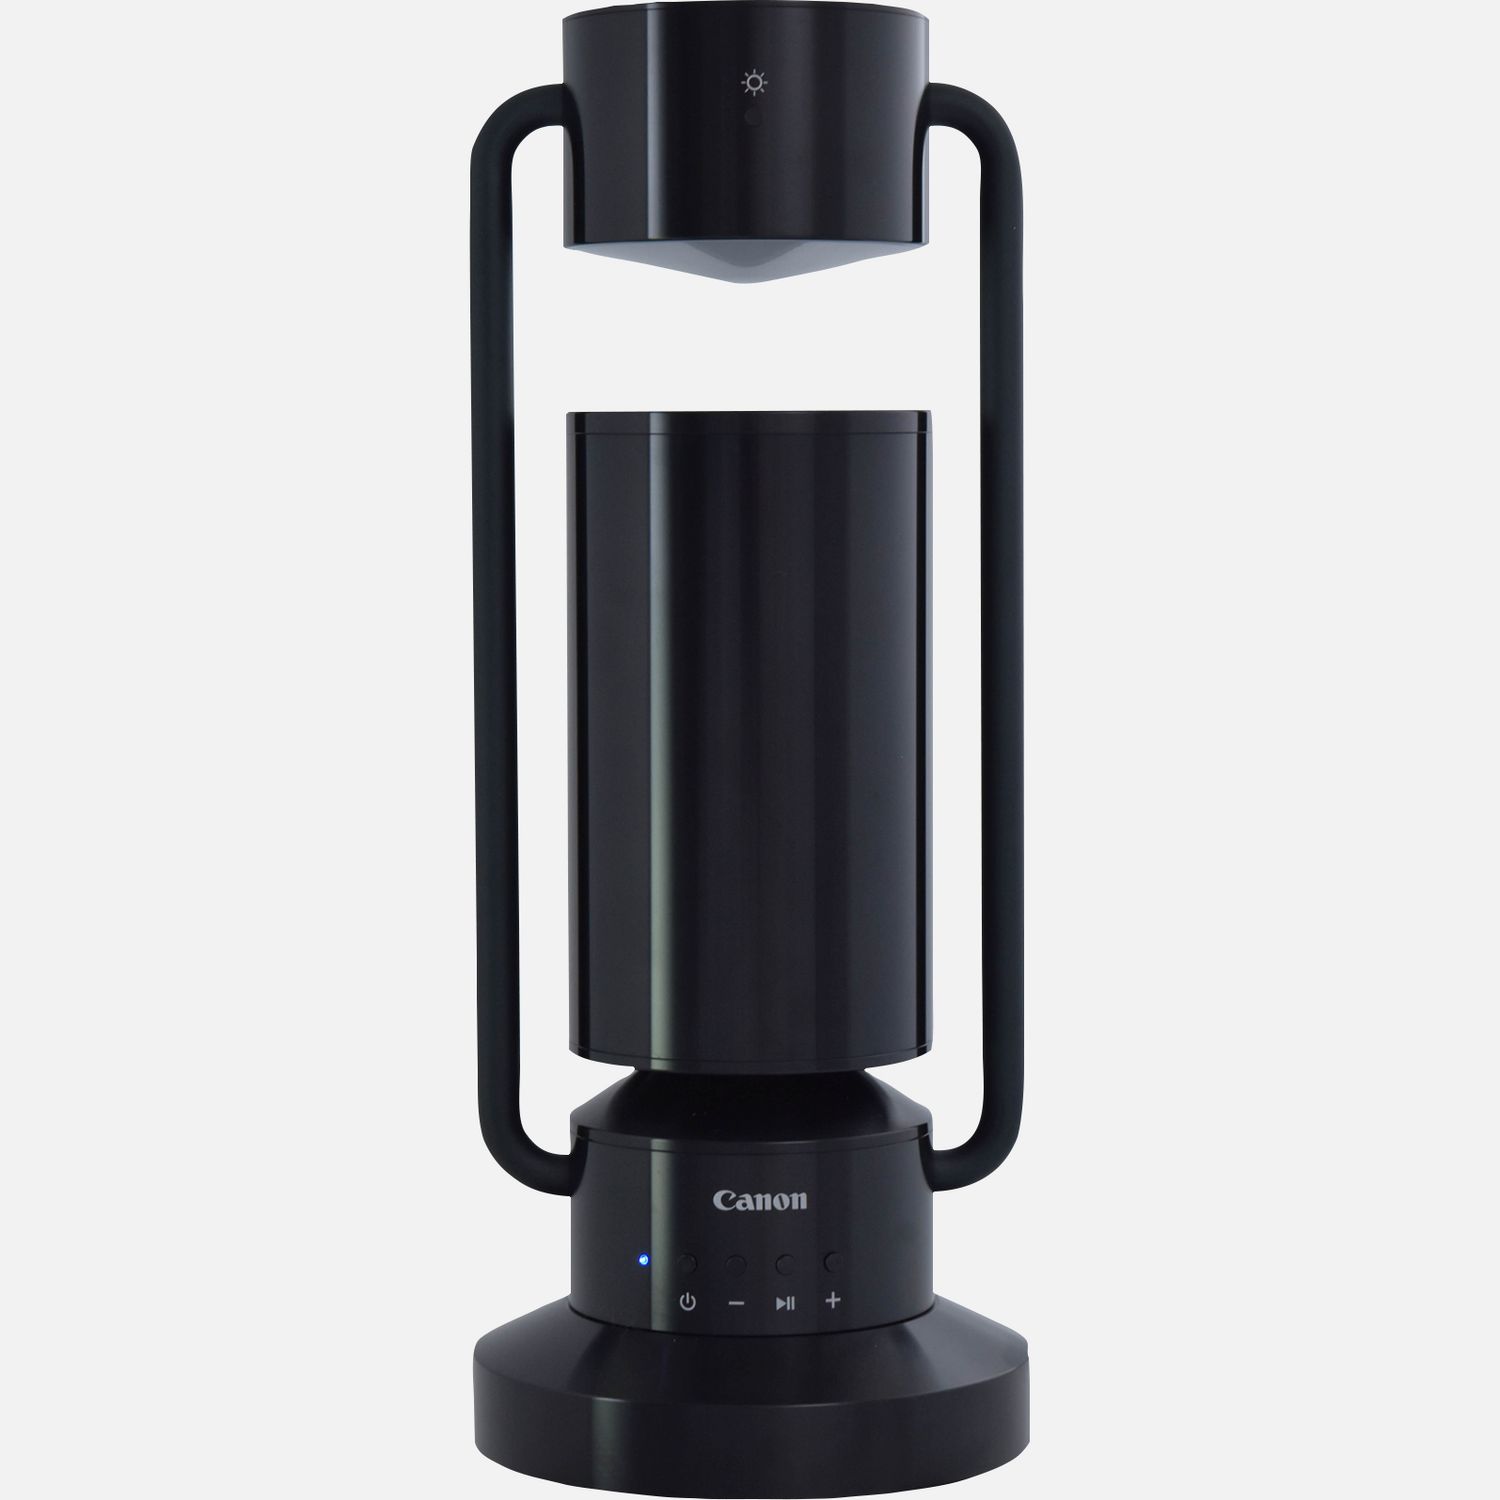 Buy Canon Leuchte & Lautsprecher ML-A: drahtlose Bluetooth Lautsprecher  Lampe aus Aluminium - Schwarz in Bluetooth-Lautsprecher mit Licht — Canon  Osterreich Shop